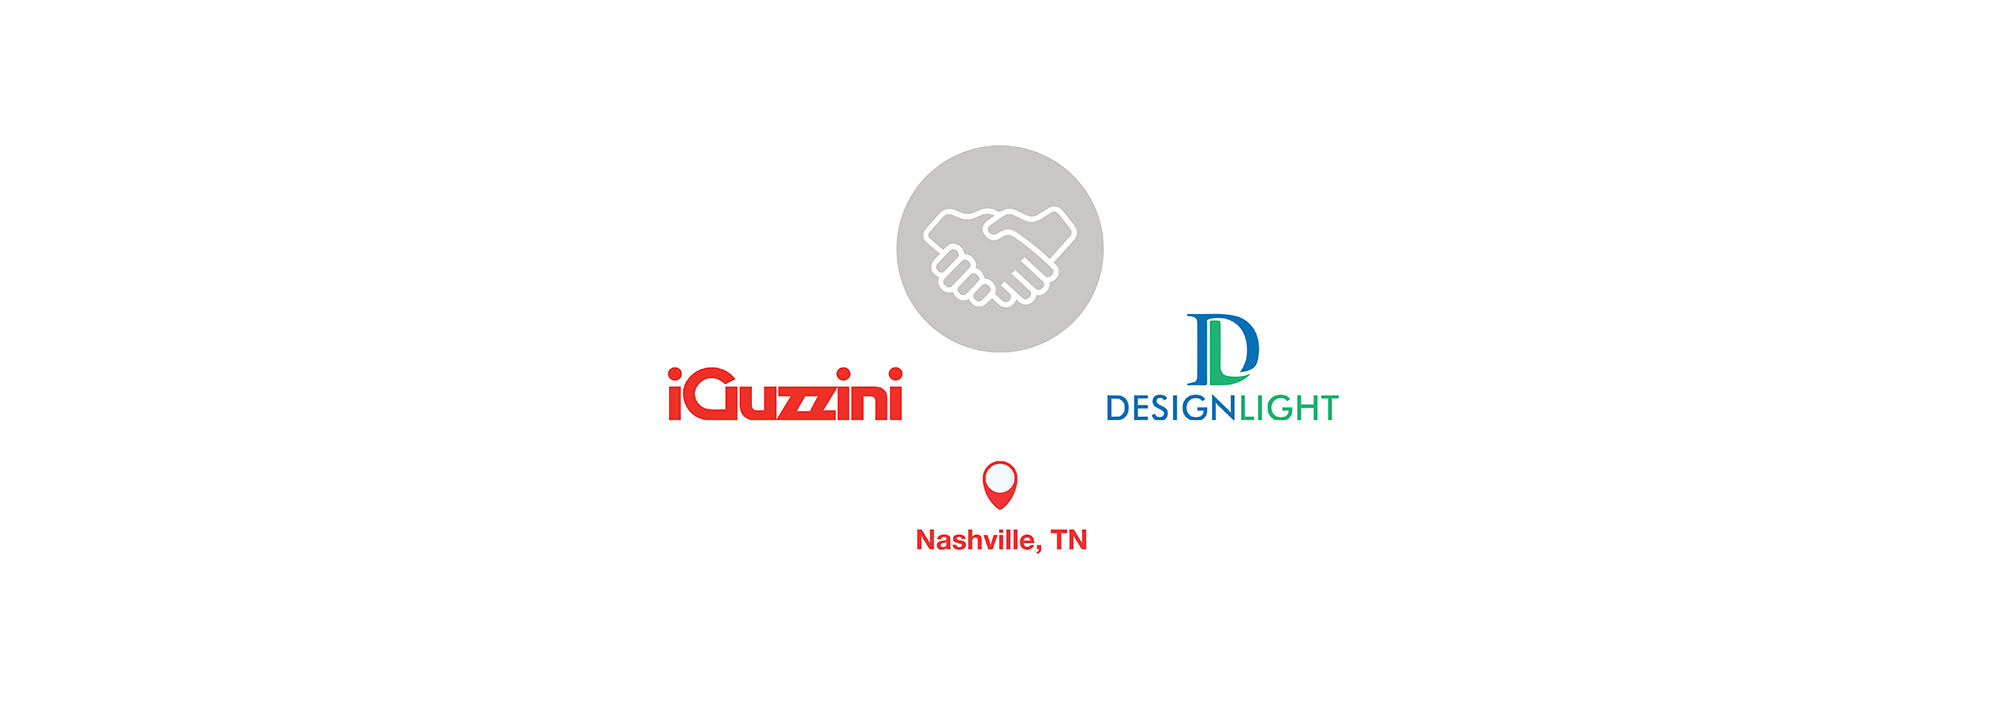 DesignLight new representative for Nashville, Tennessee